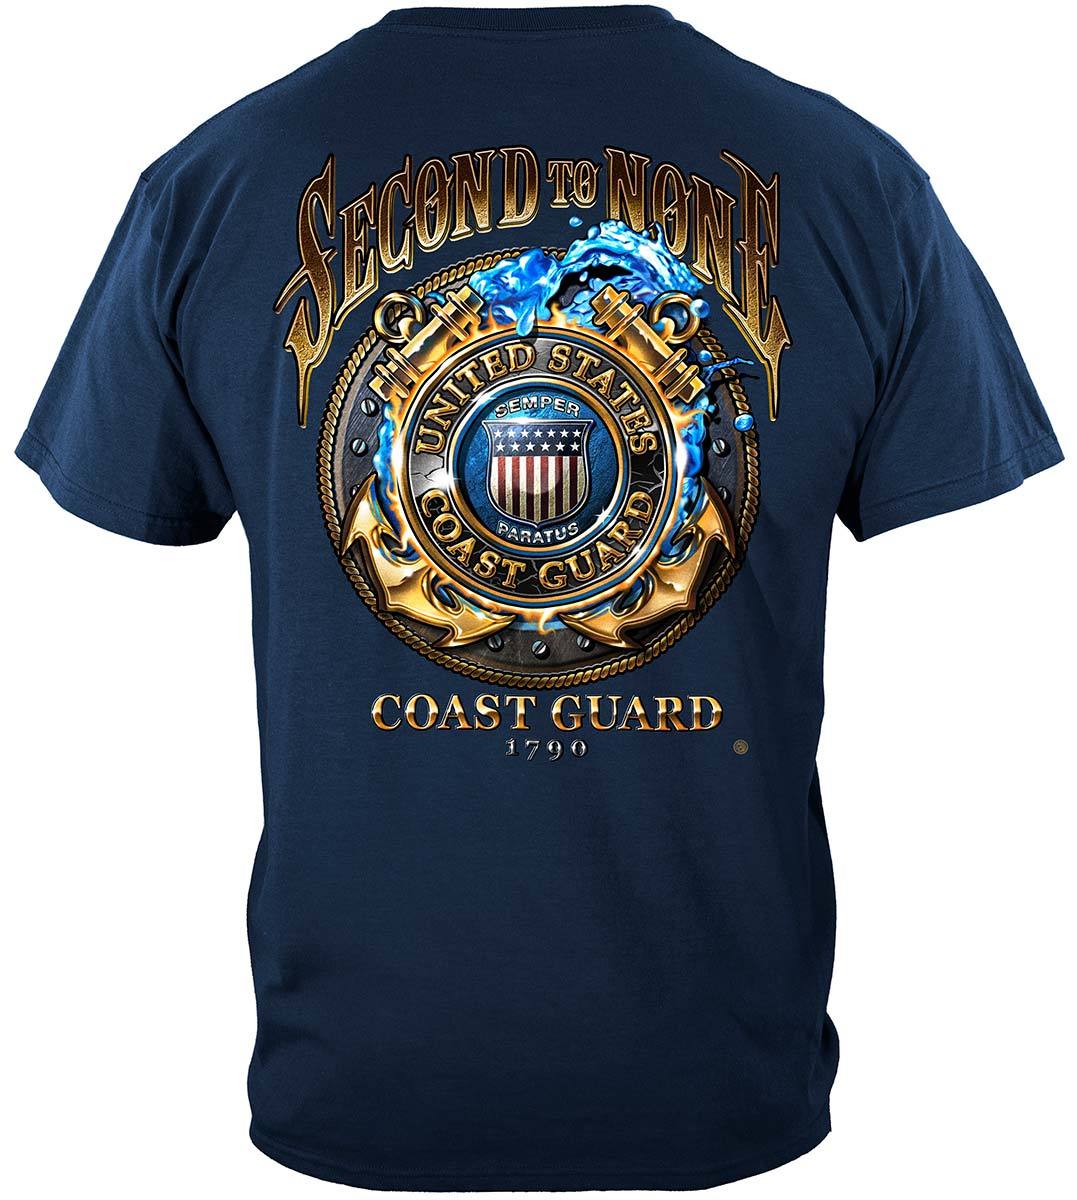 Erazor Bits T-Shirt, Coastal Fishing Shirt, 100% Pre-Shrunk Cotton Apparel